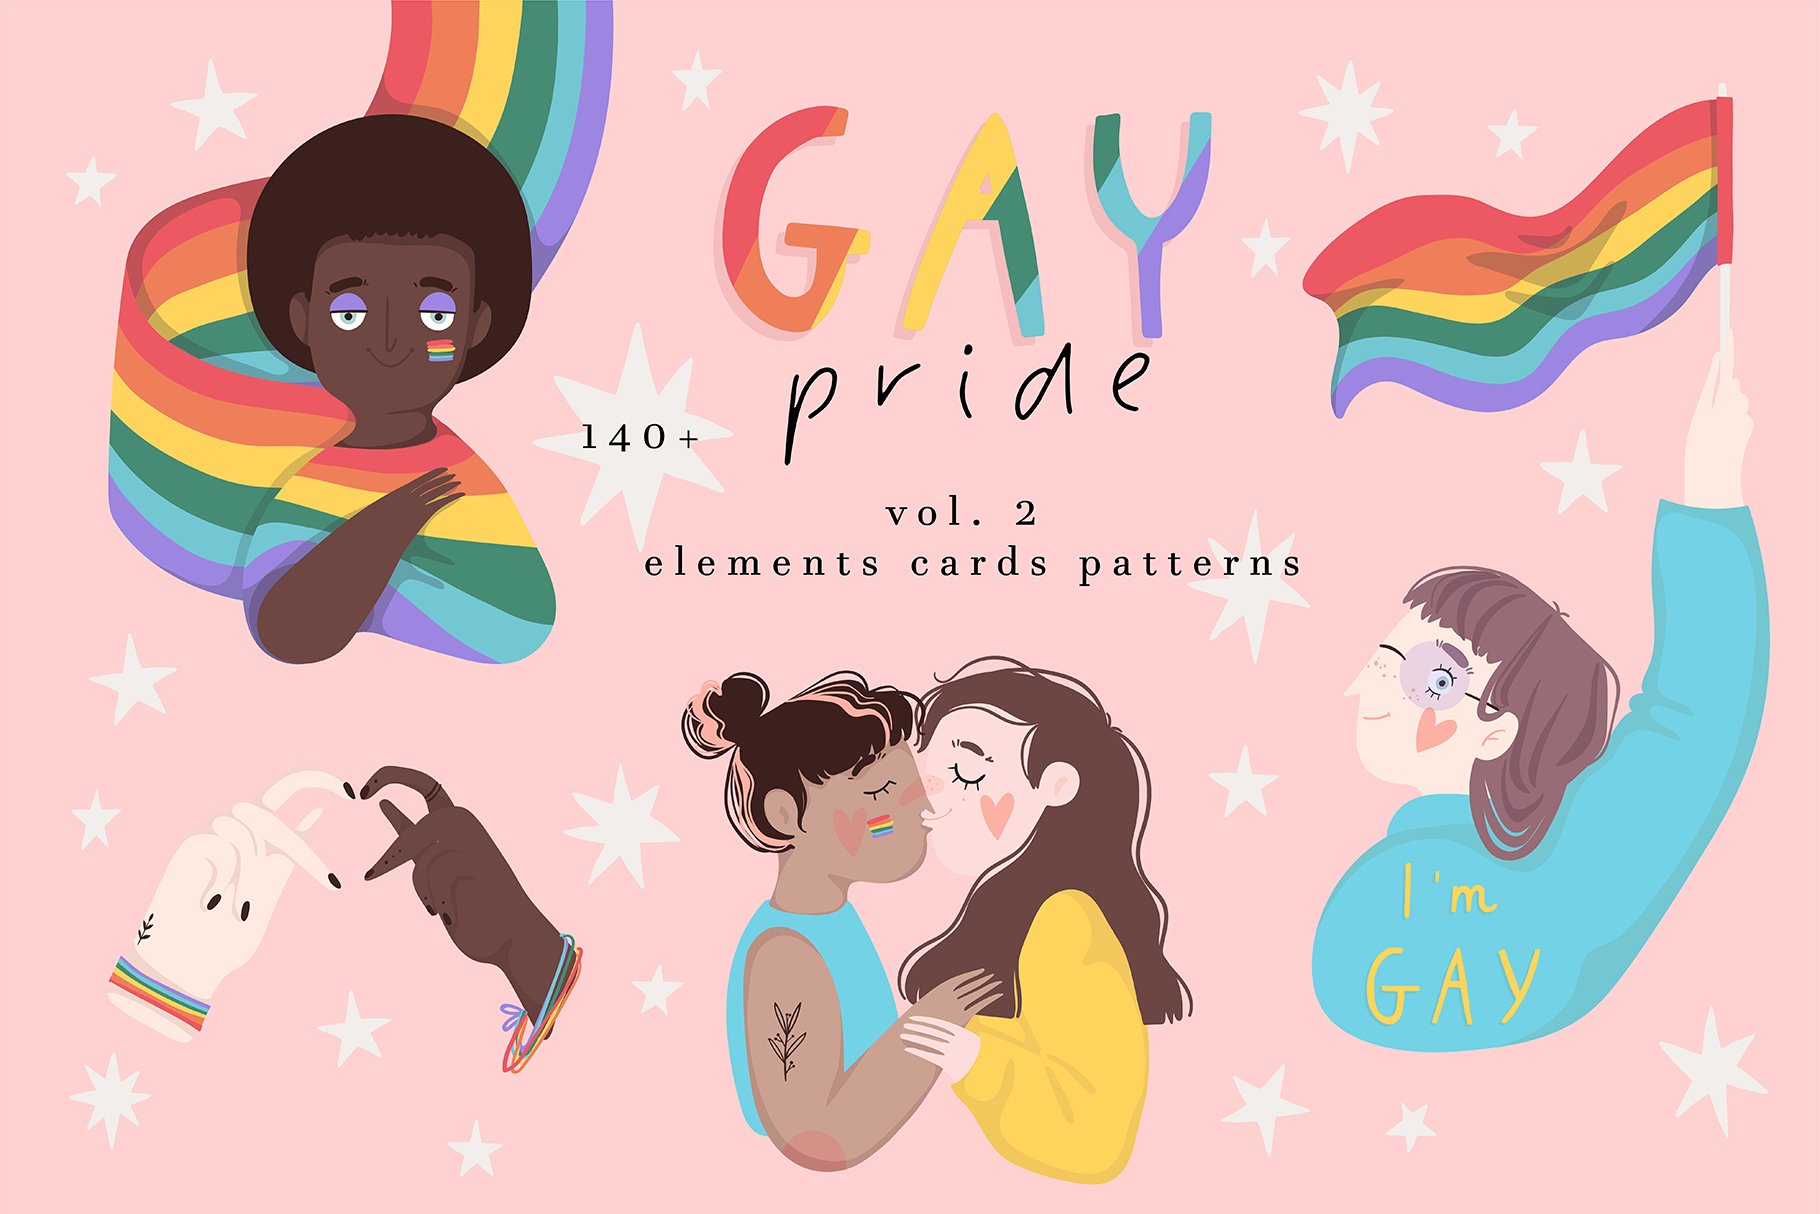 Gay Pride illustrations set Vol. 2 cover image.